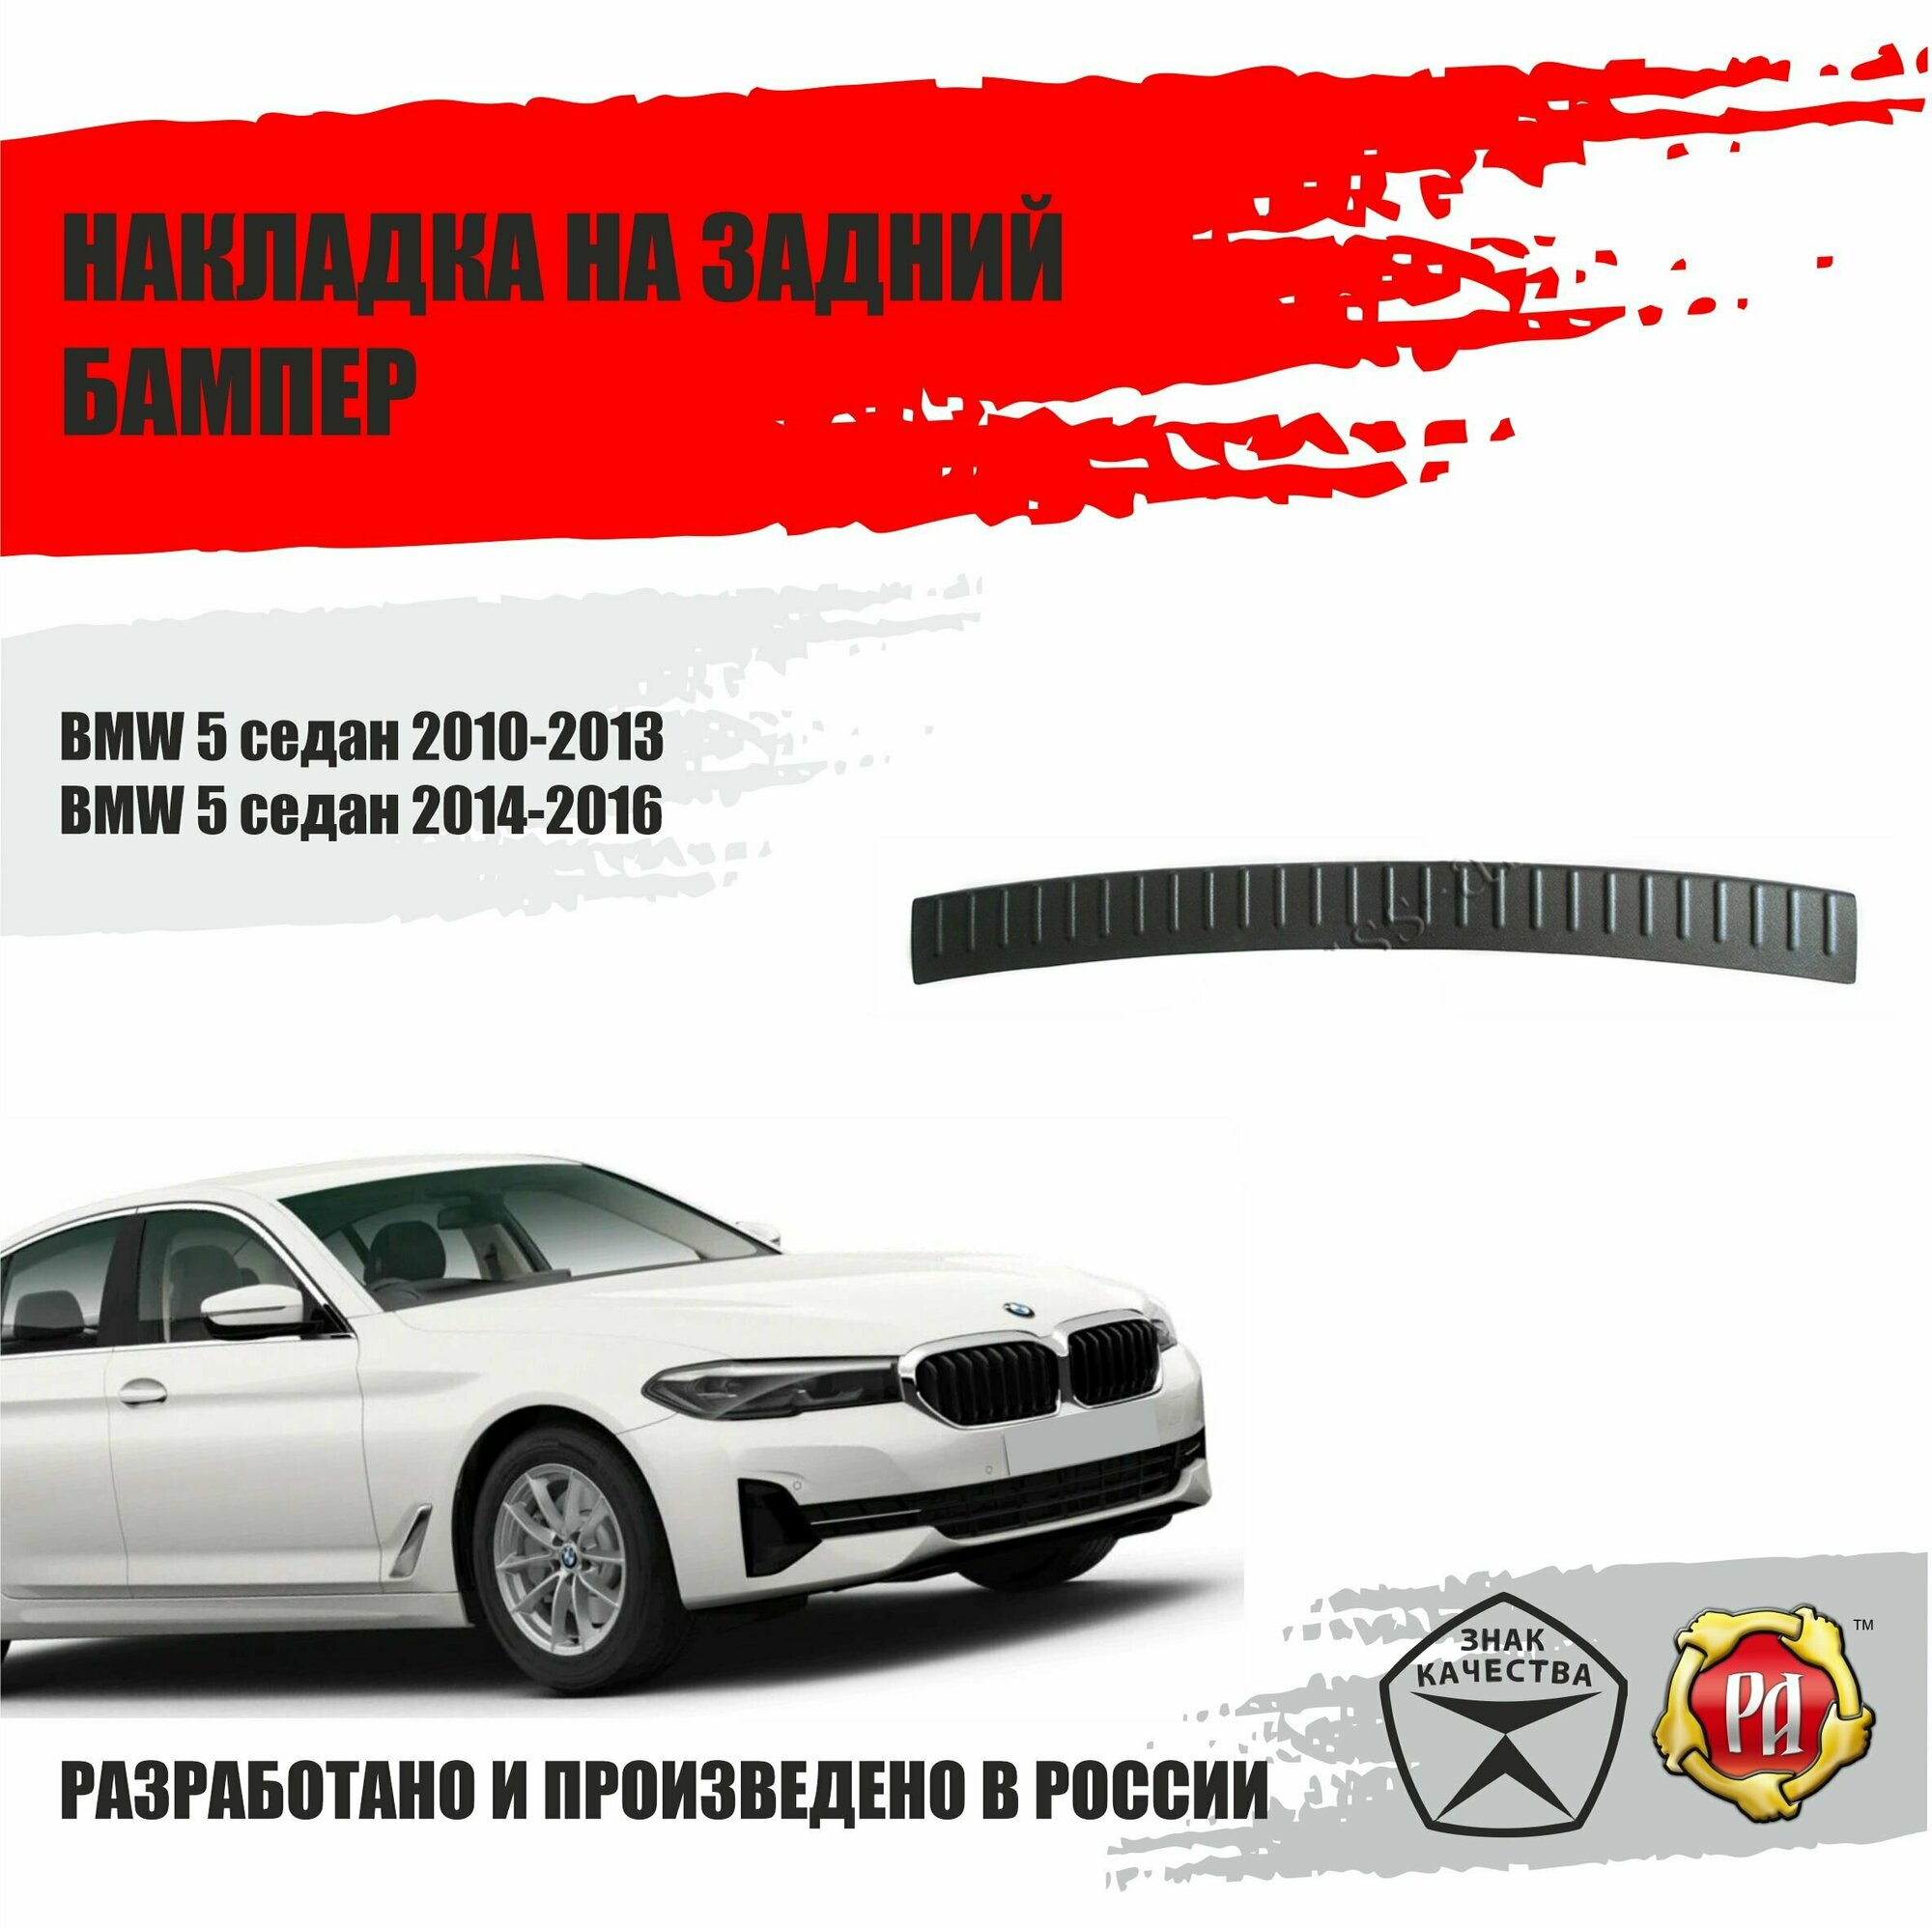 Накладка на задний бампер Русская Артель для авто BMW 5 седан 2010-2013